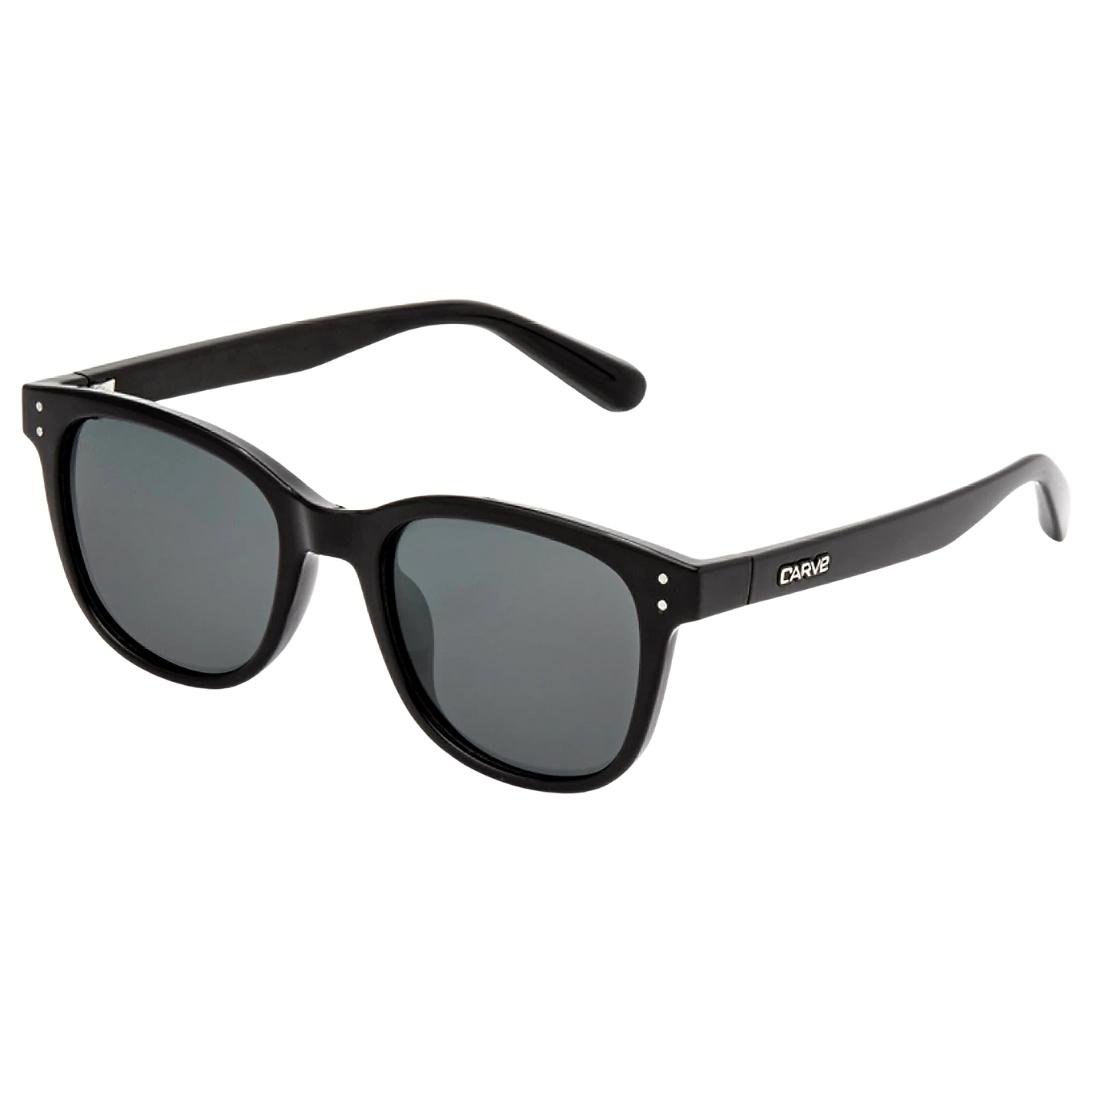 Carve Homeland Polarised Sunglasses - Black Grey Polarised - Square/Rectangular Sunglasses by Carve